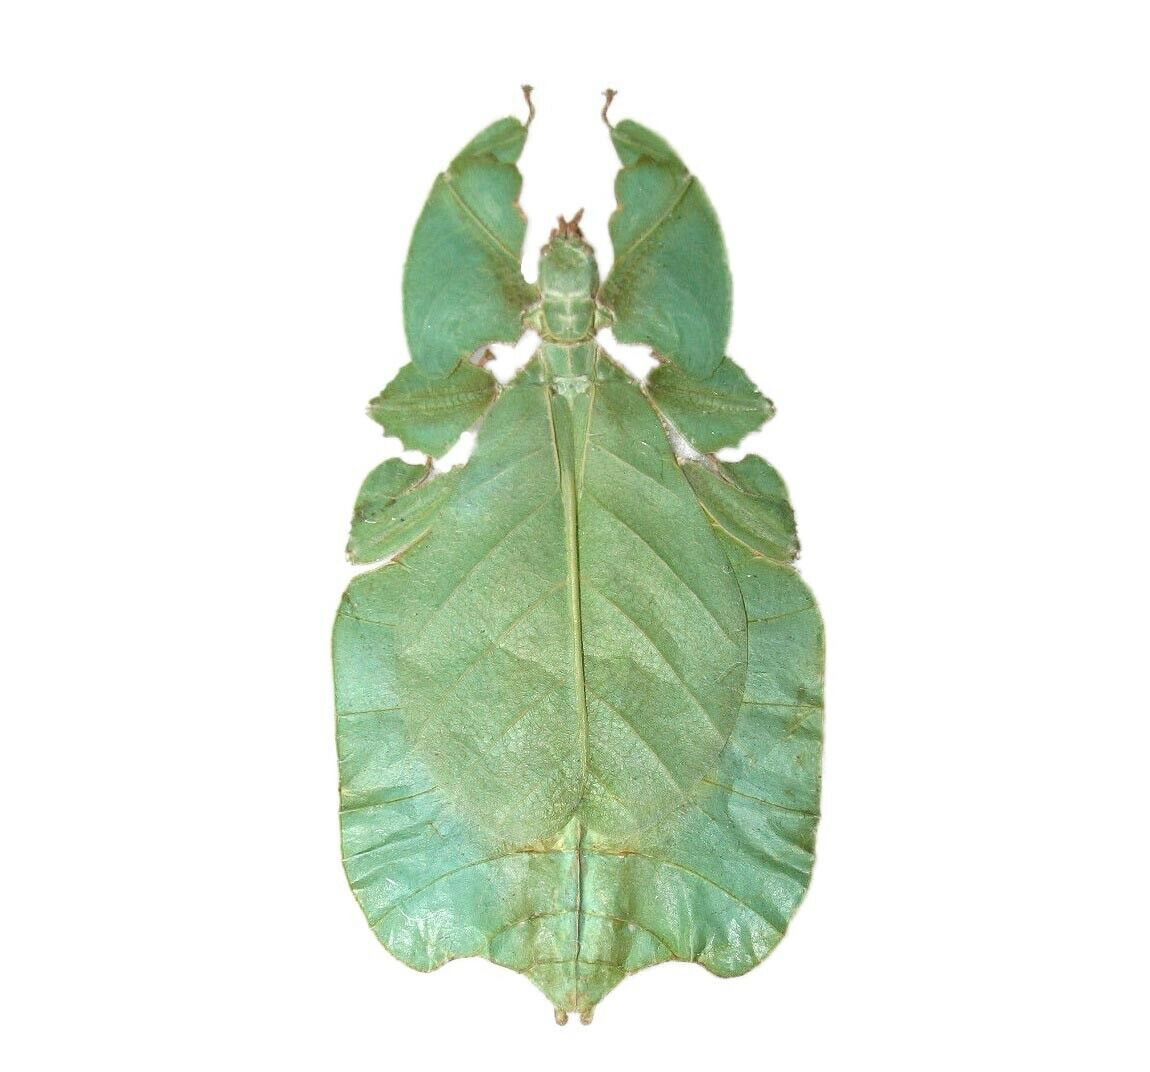 Phyllium Pulchrifolium One Real Green Walking Leaf Stick Bug Spread